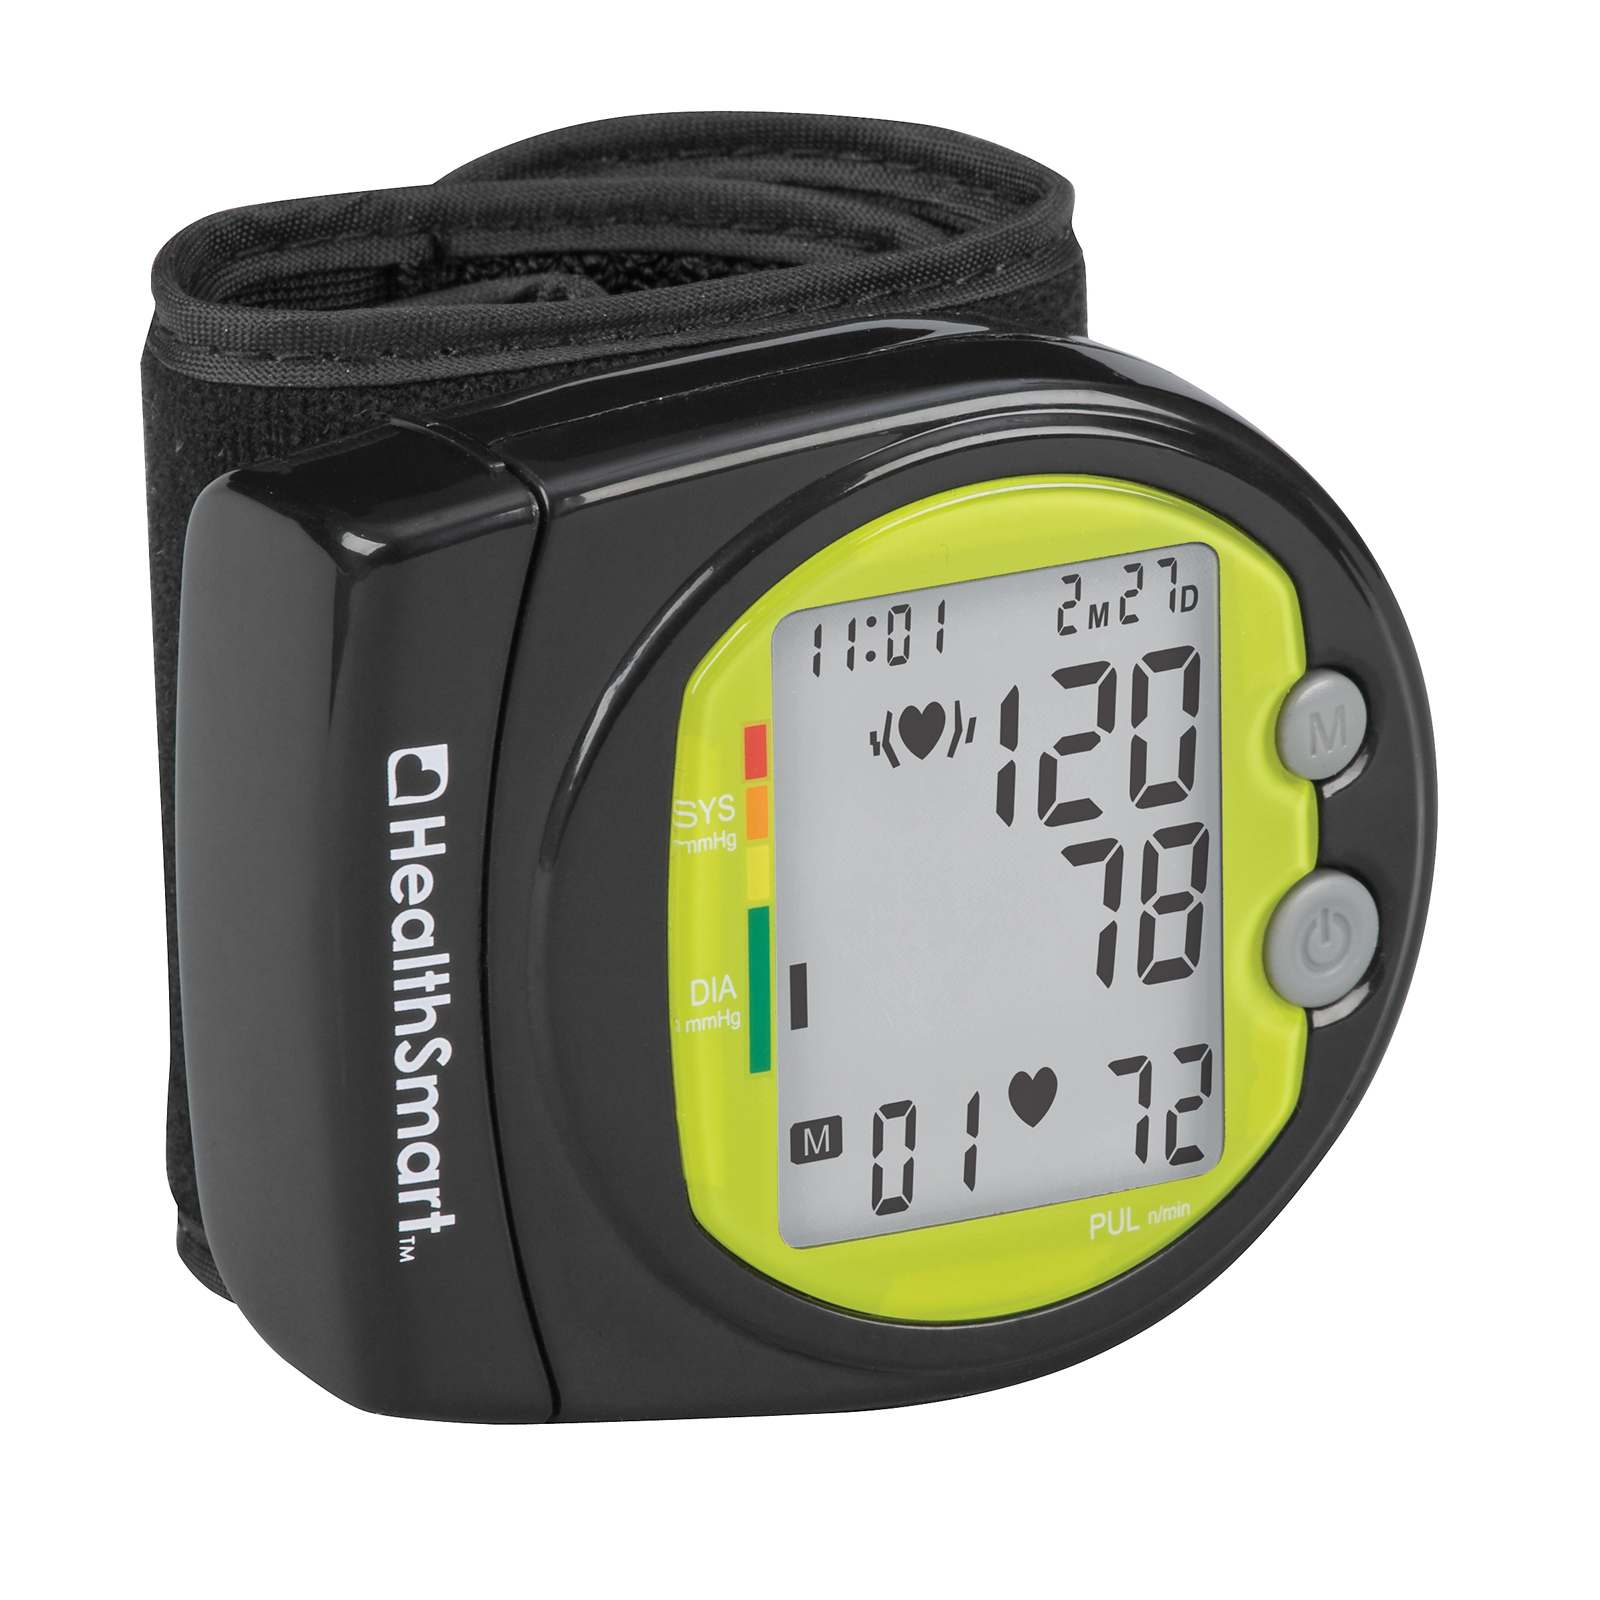 HealthSmart Sports Automatic Wrist Digital Blood Pressure Monitor